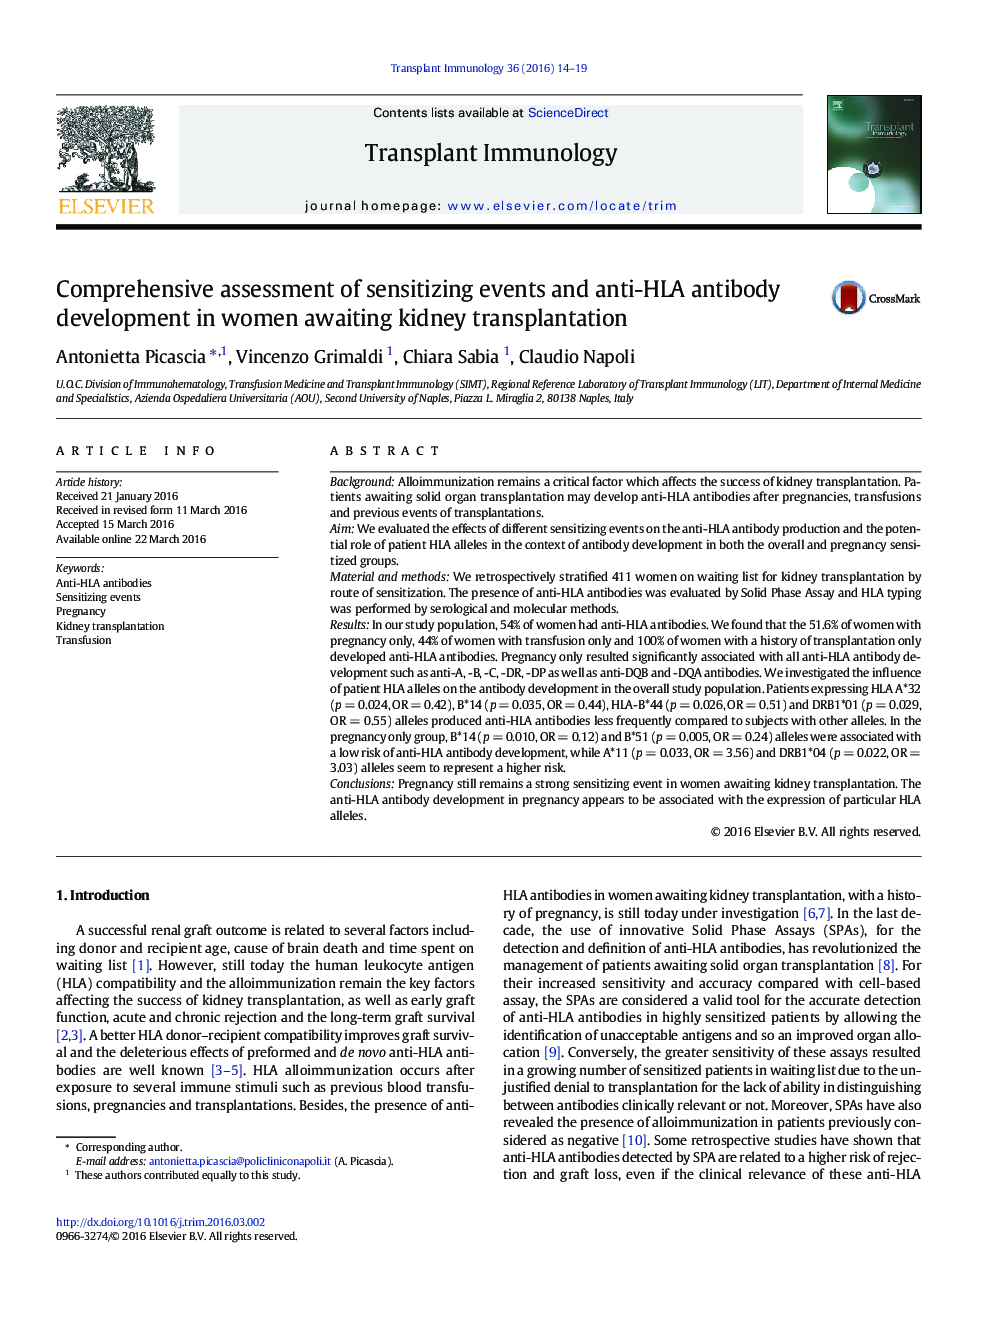 Comprehensive assessment of sensitizing events and anti-HLA antibody development in women awaiting kidney transplantation